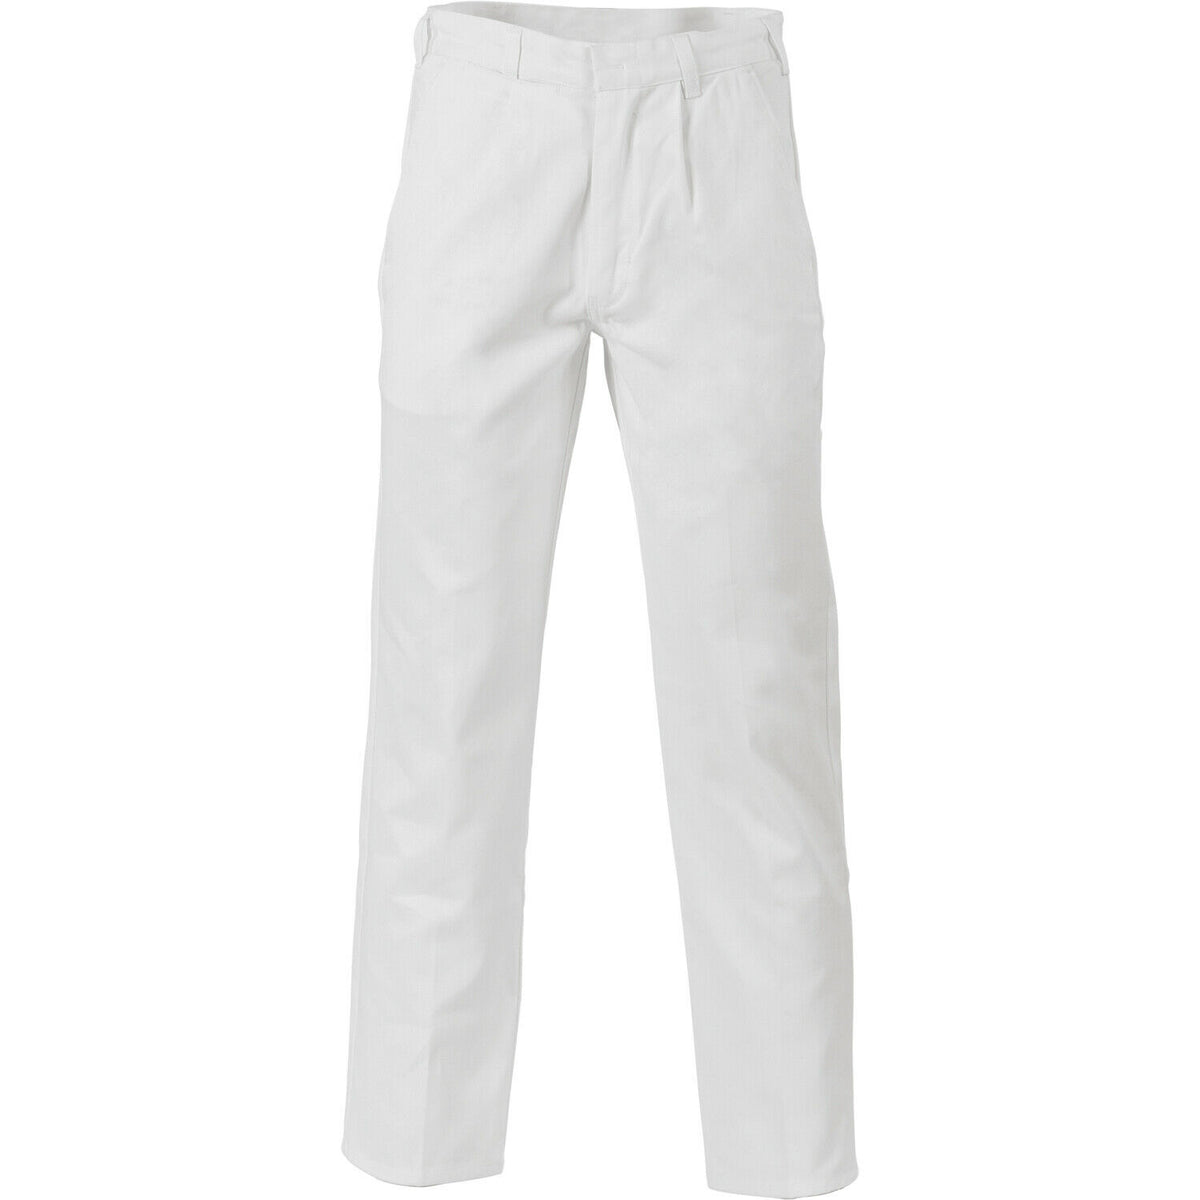 DNC Workwear Mens Cotton Drill Work Pants Comfortable Heavyweight Work 3311